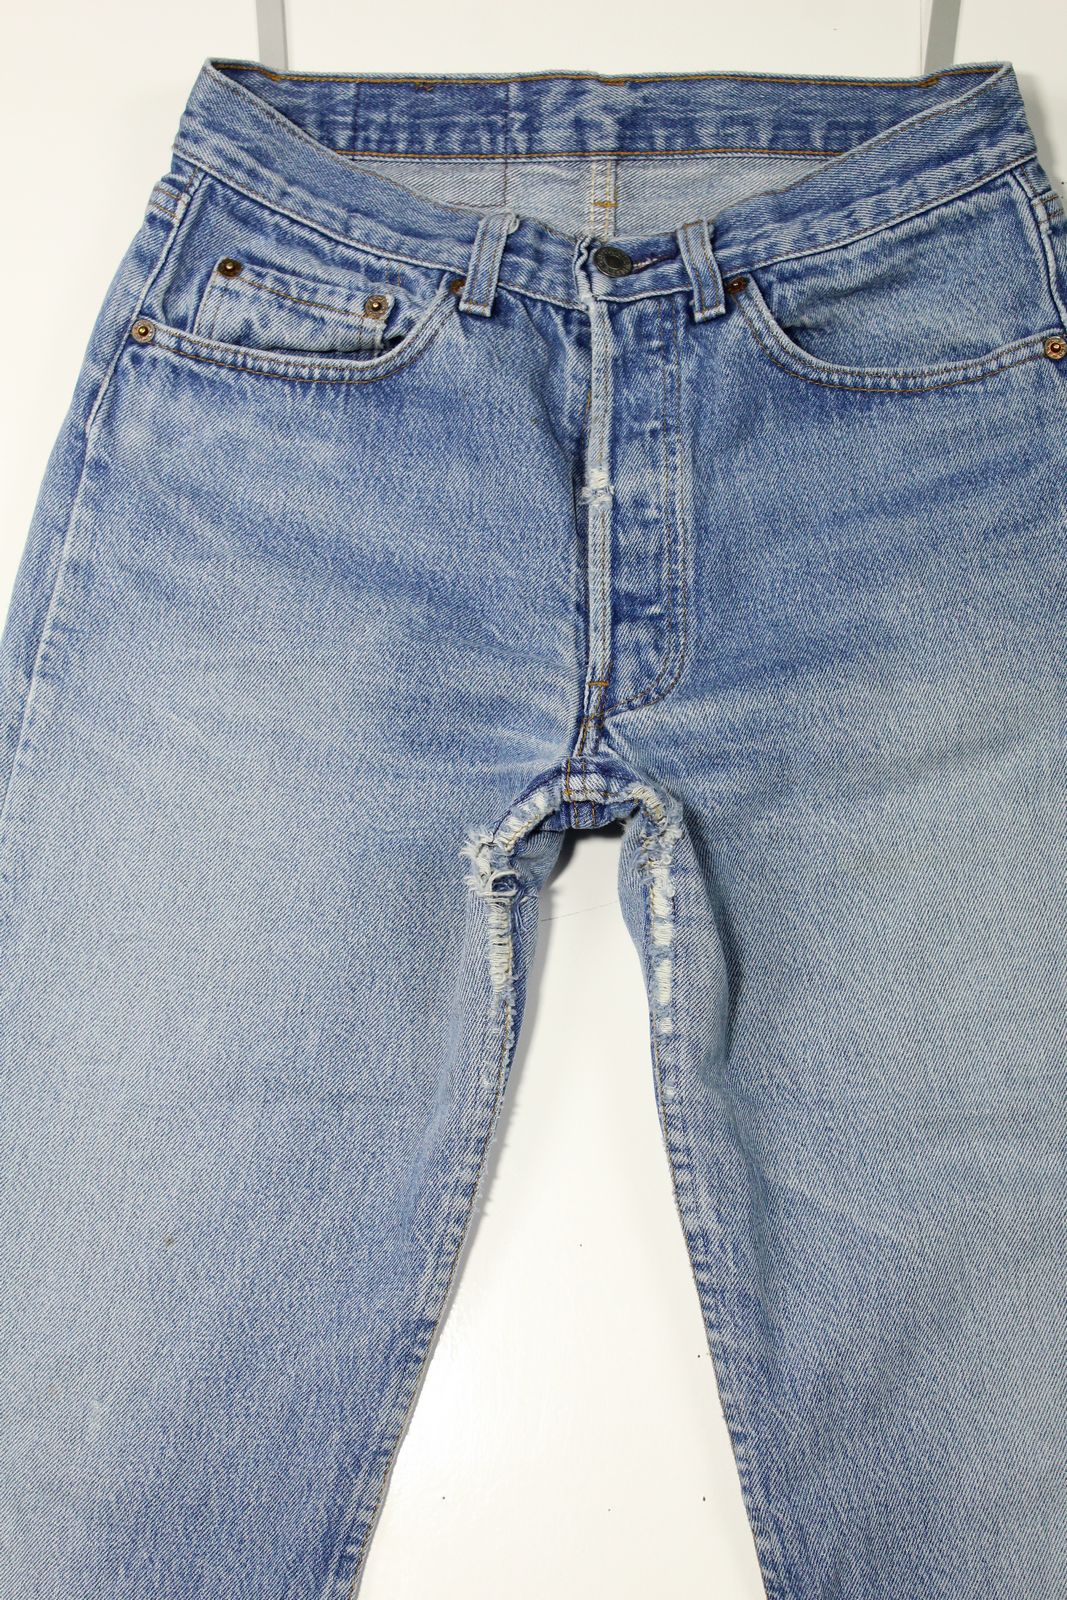 Levi's 501 Denim W31 L34 Made In USA Jeans Vintage